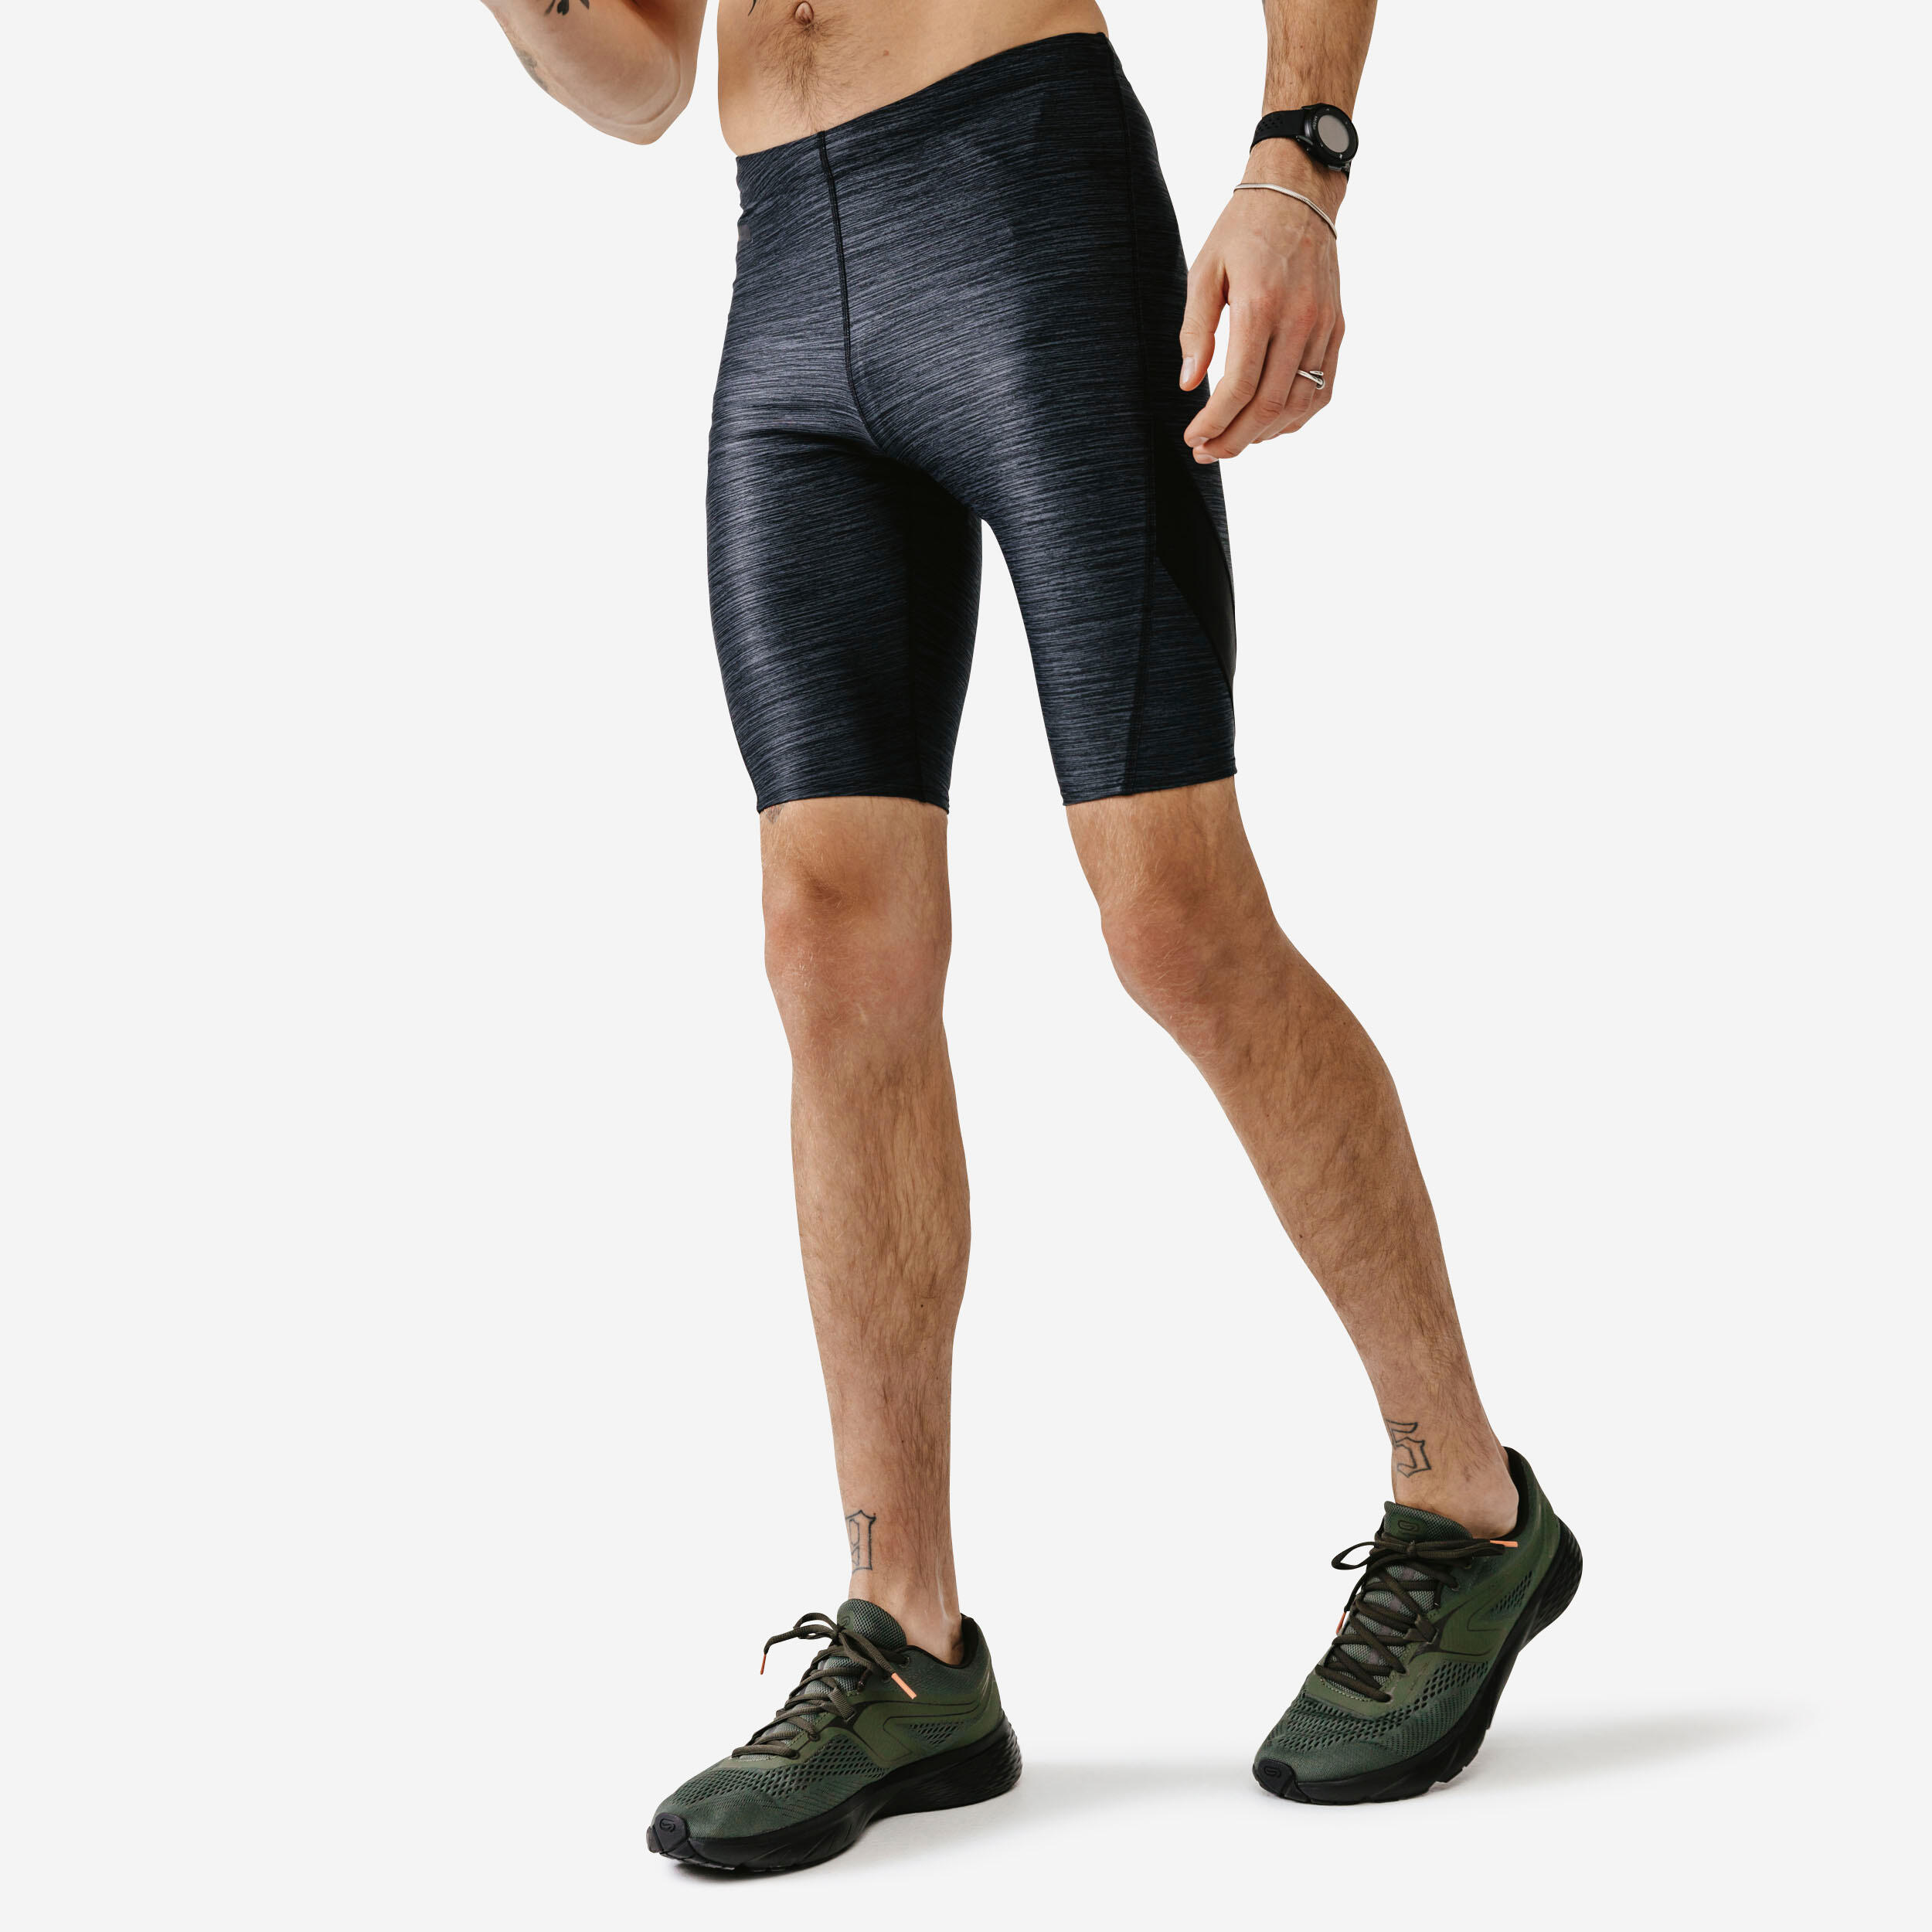 KALENJI Men's Running Breathable Tight Shorts Dry+ - abyss grey